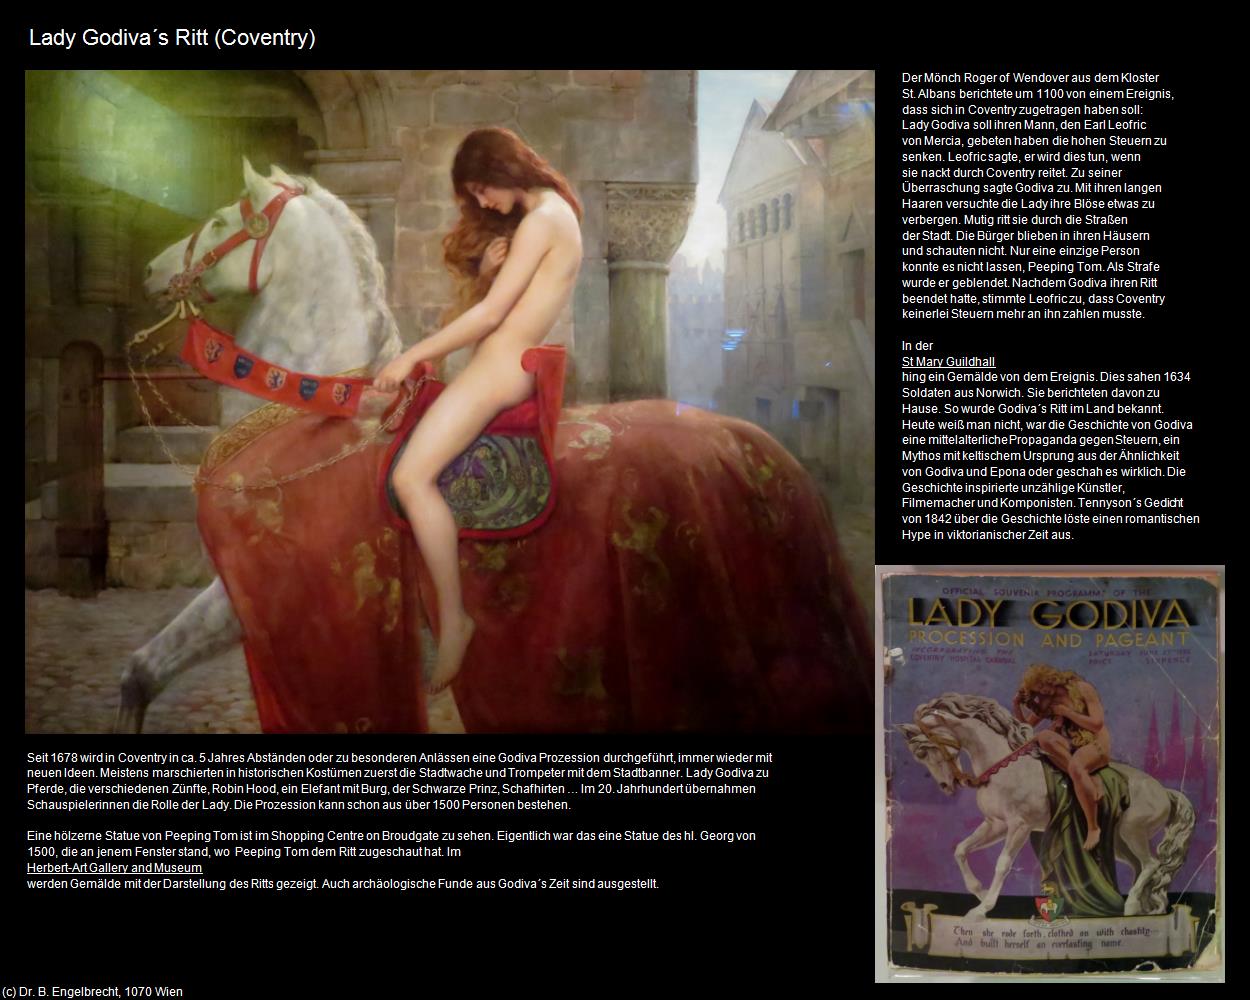 Lady Godiva‘s Ritt (Coventry, England      ) in Kulturatlas-ENGLAND und WALES(c)B.Engelbrecht